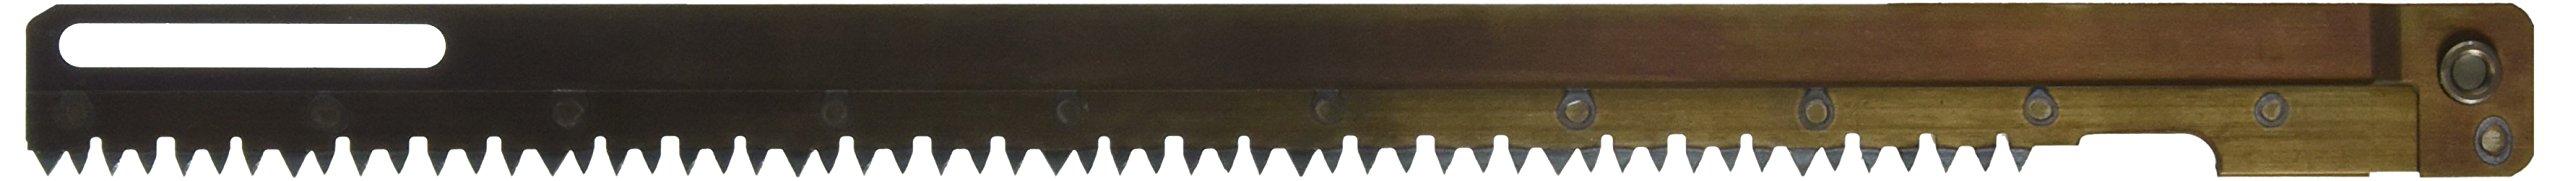 DeWalt LAMA PER SEGA ALLIGATOR - 360 x 275 mm - (Cartongesso, assi.) - (Compatibile con DW391 / DW393 / DW394)